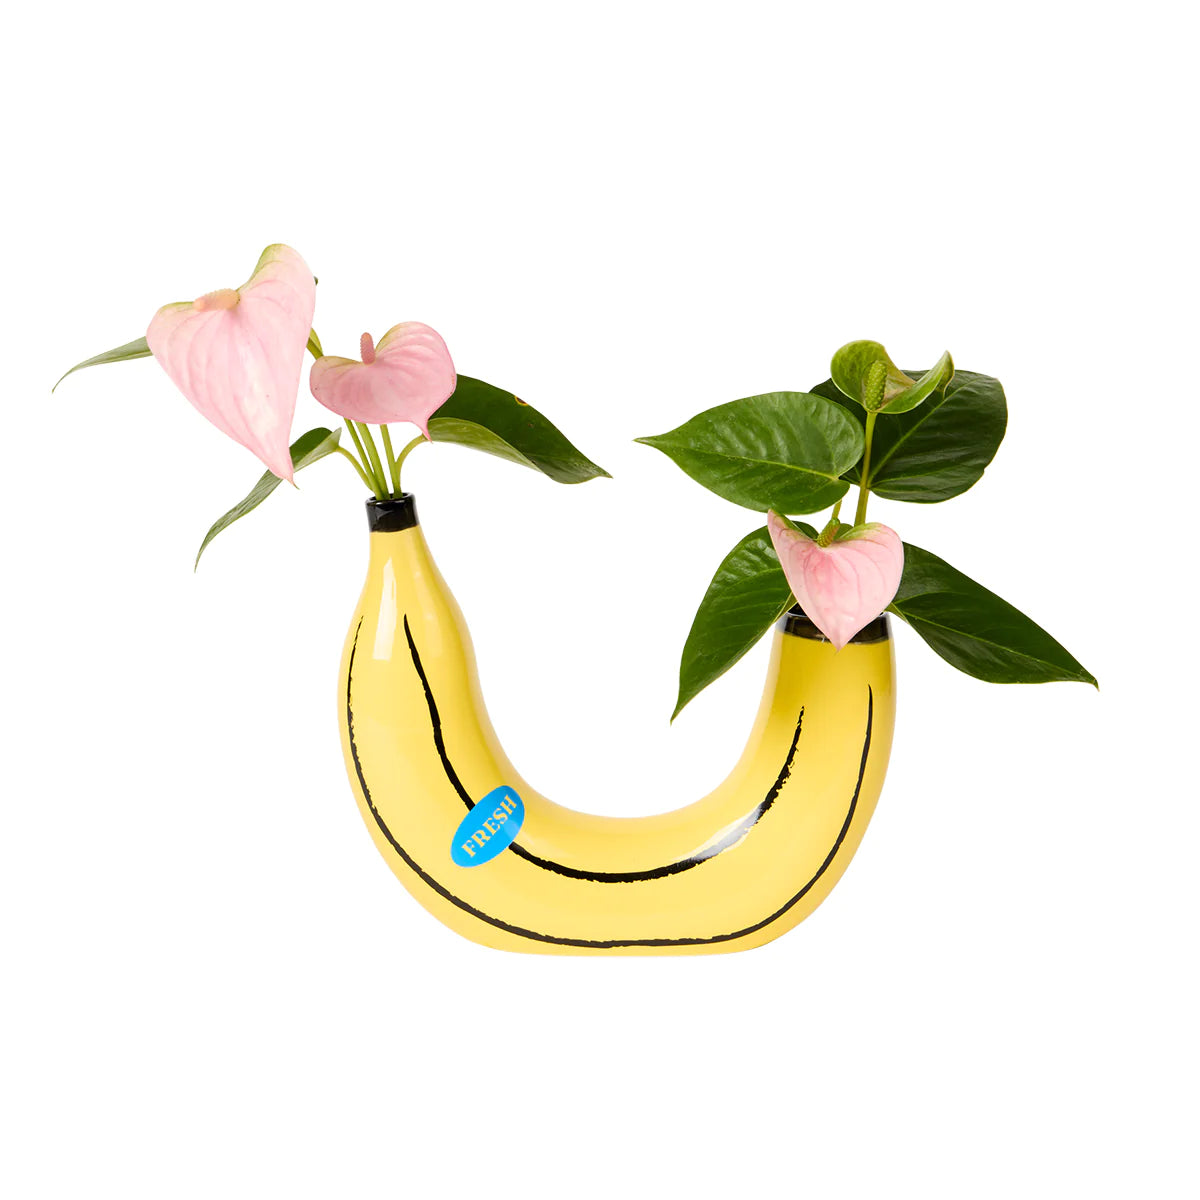 Doiy: Banana Vase